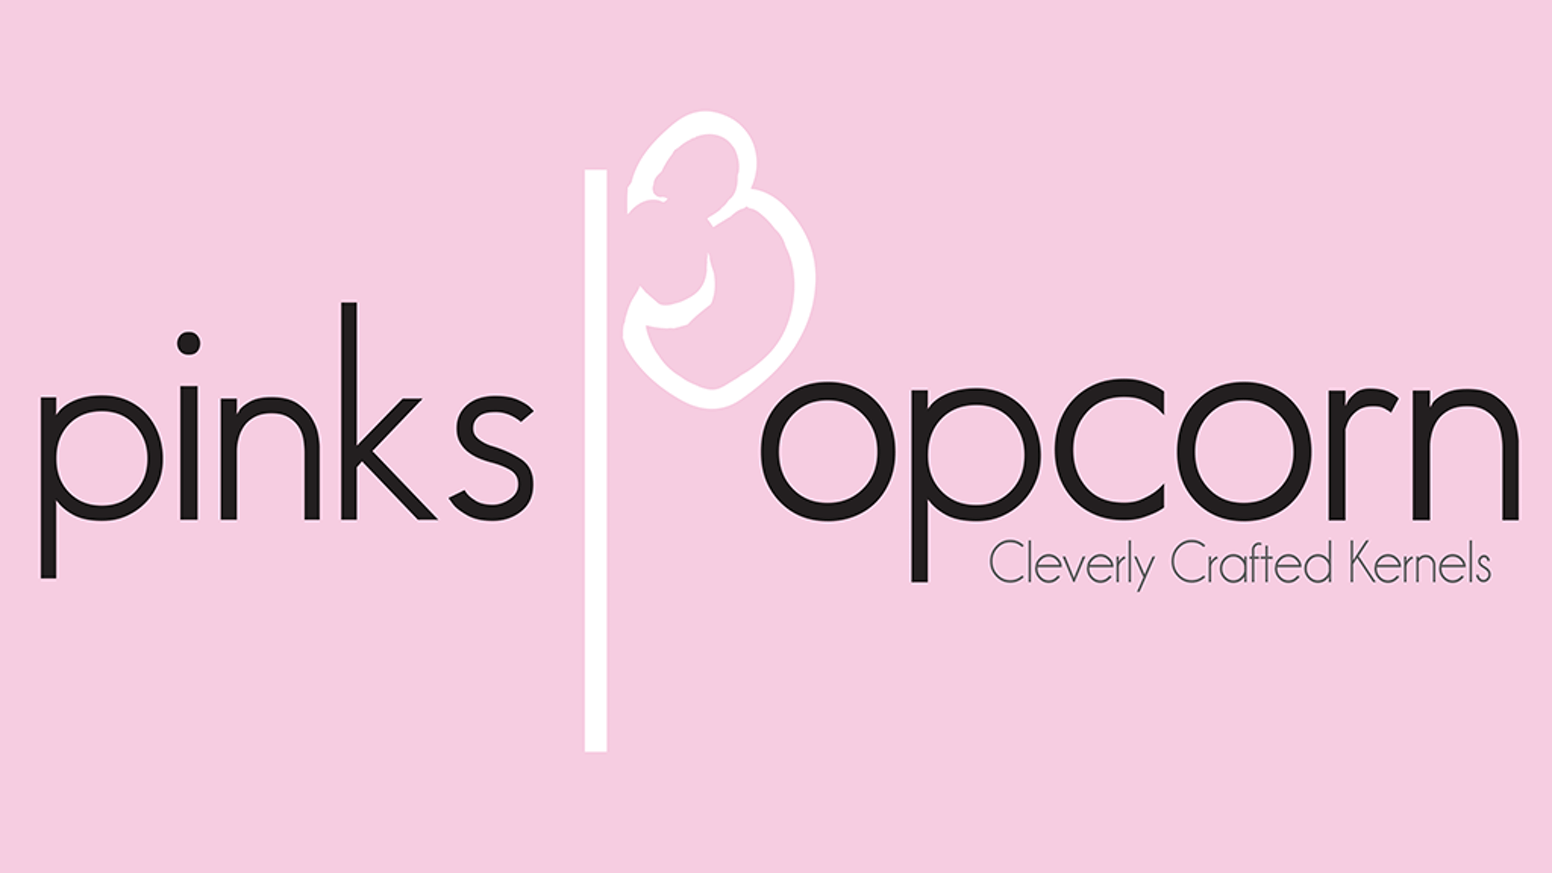 Pink's Logo - PINKS POPCORN - Cleverly Crafted Kernels by Lisa Morales — Kickstarter